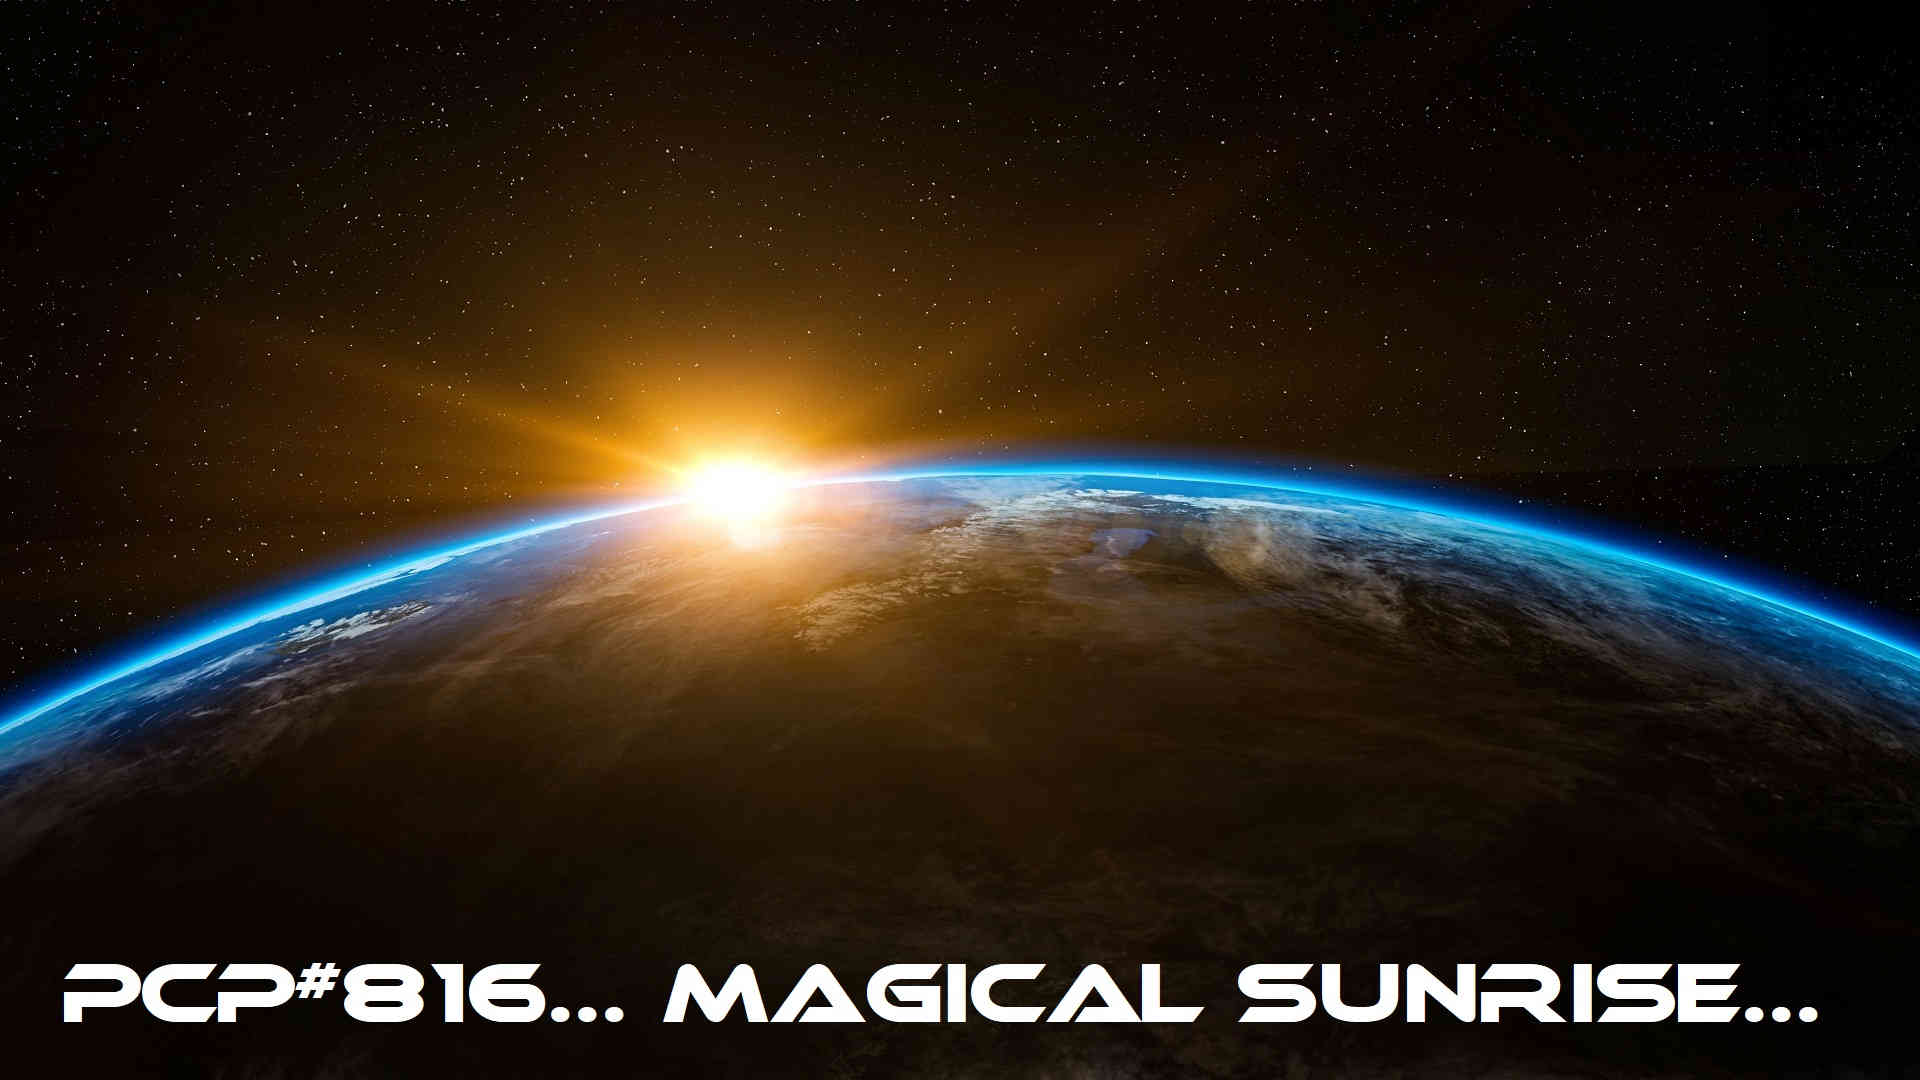 PCP#816... Magical Sunrise...